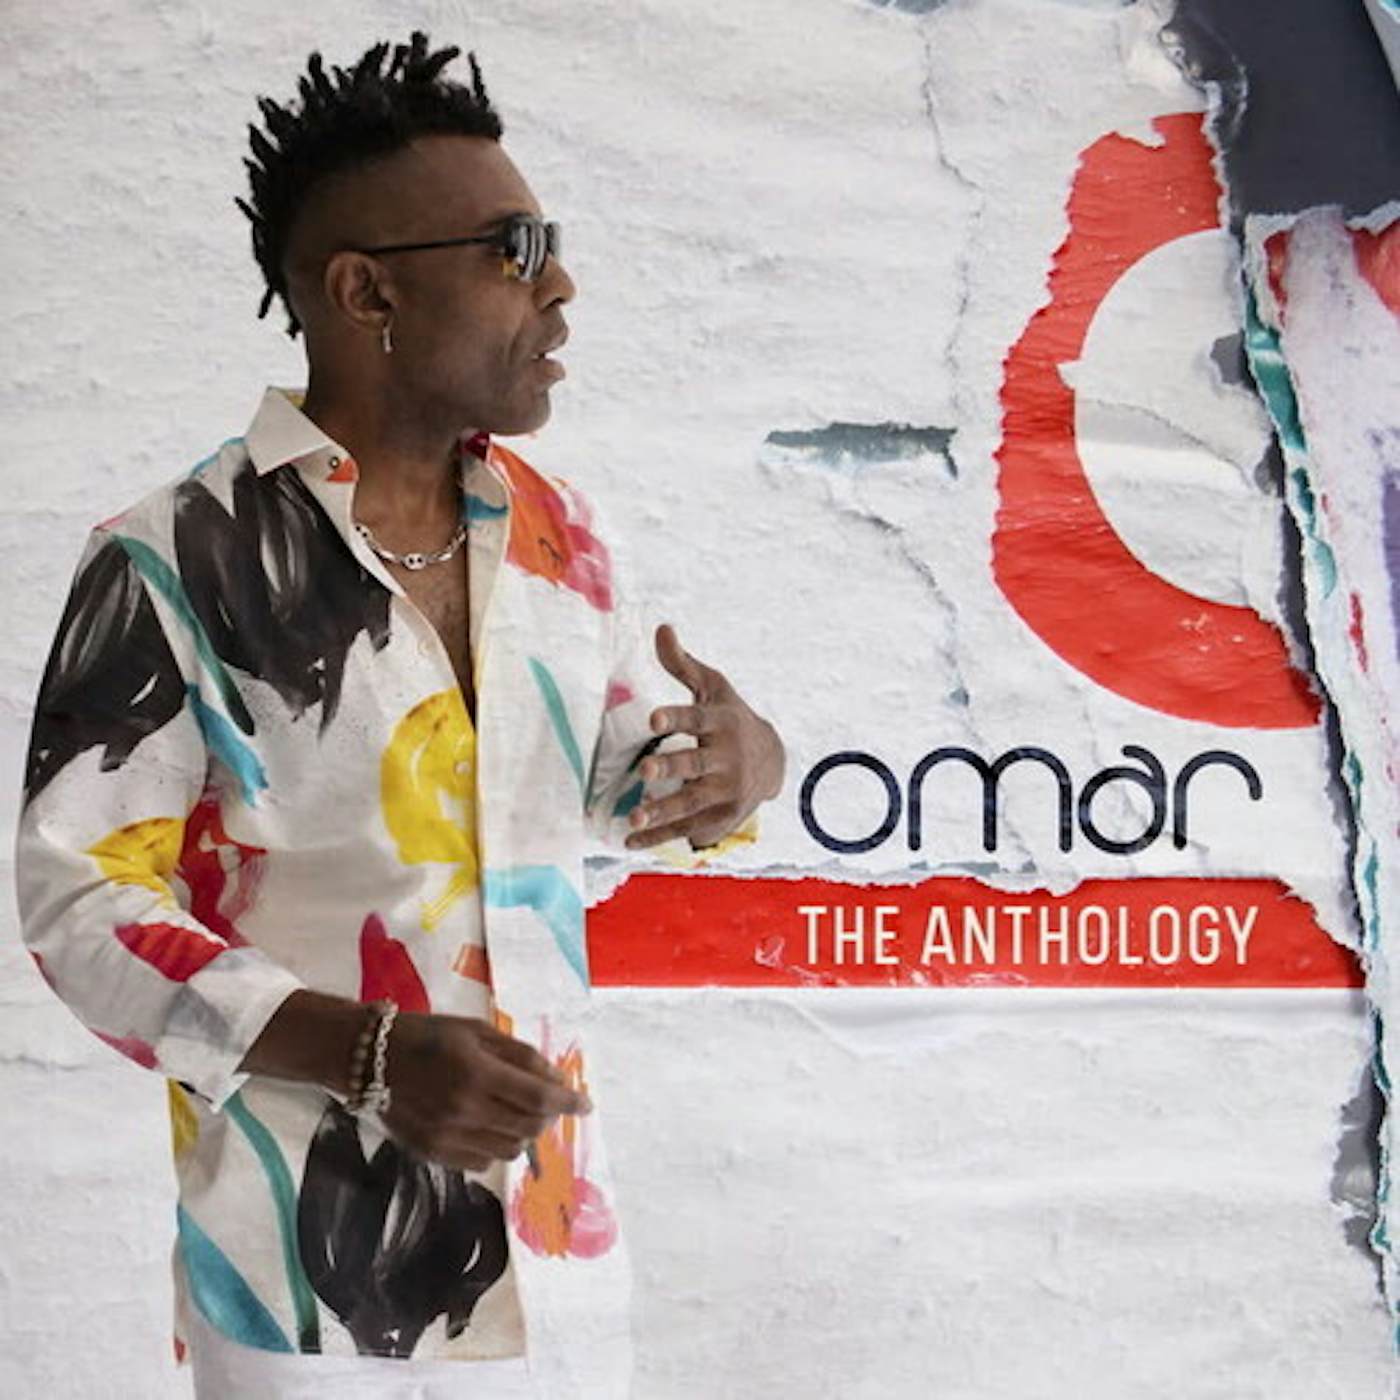 Omar ANTHOLOGY Vinyl Record